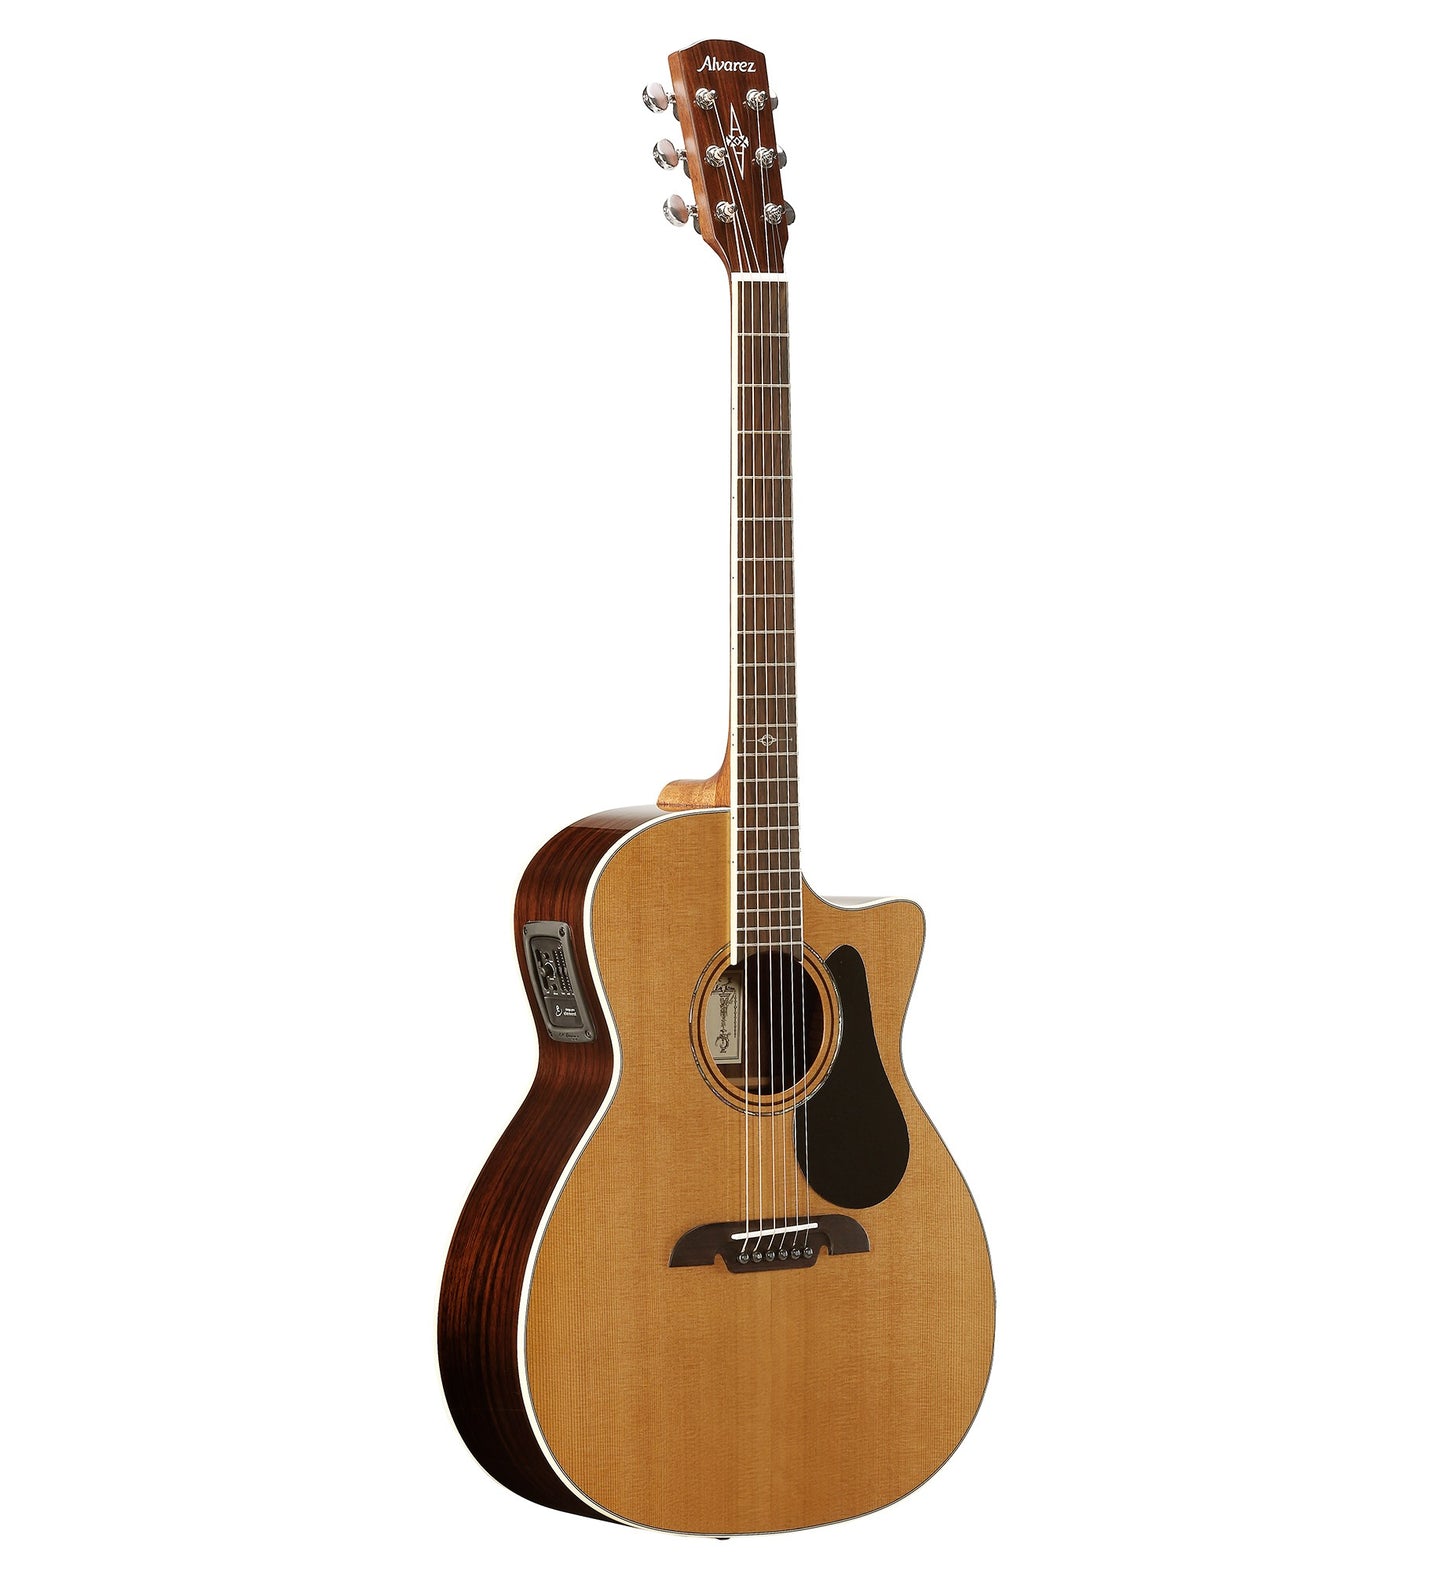 Alvarez AG75WCE Solid Top Grand Auditorium Acoustic Guitar with Pickup